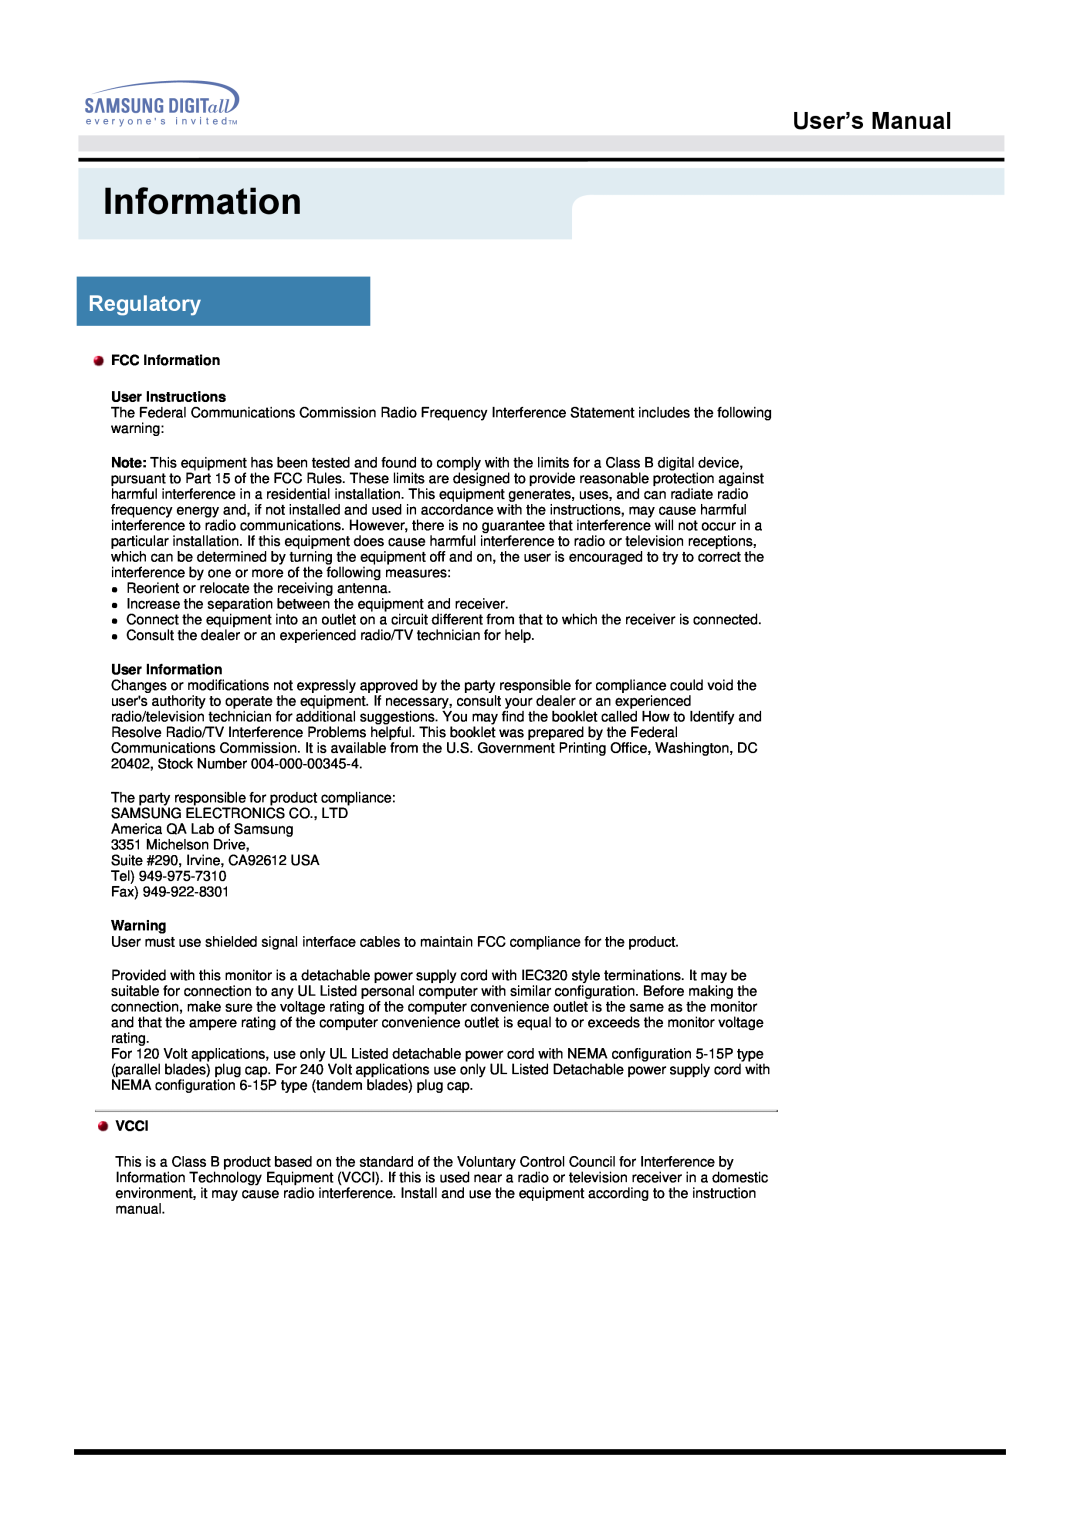 Samsung 171Q manual Regulatory, User’s Manual, FCC Information User Instructions, User Information, Vcci 